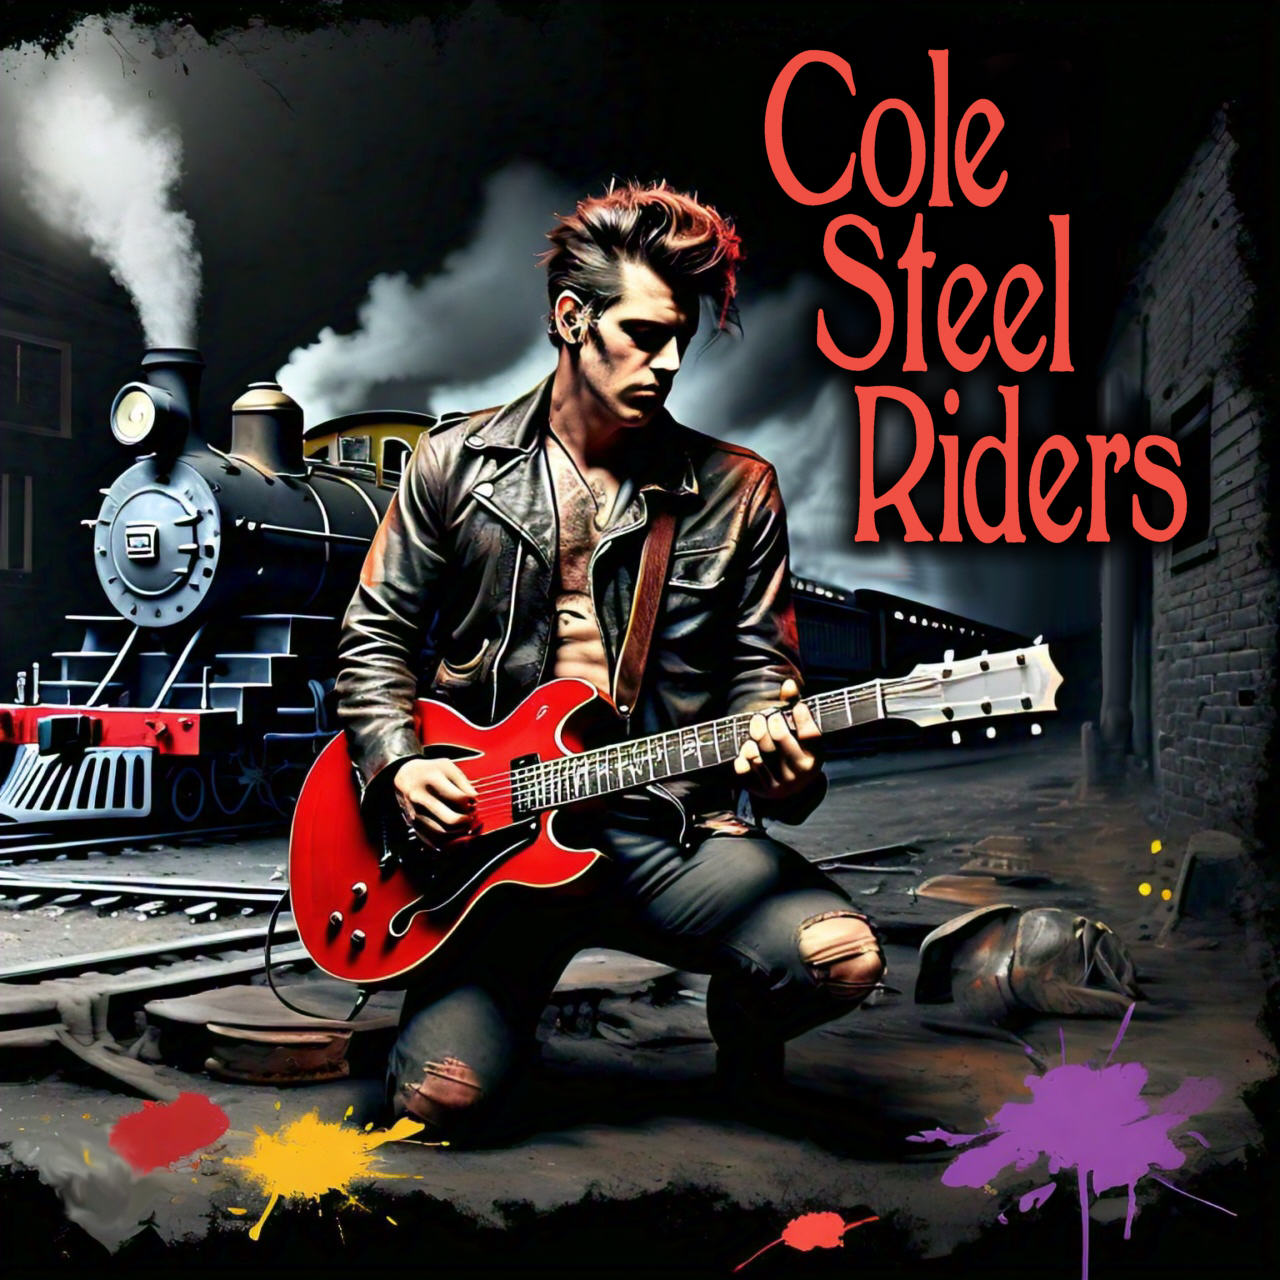 Cole Steel Riders